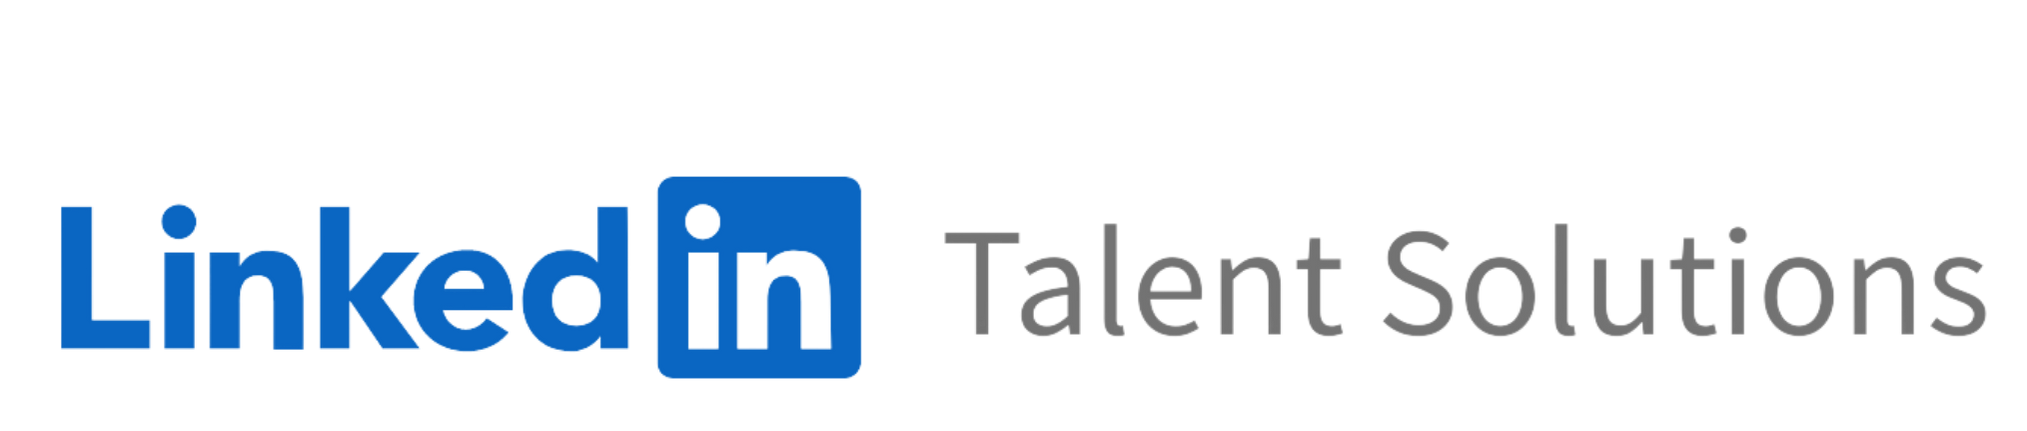 LinkedIn Talent Solutions Logo